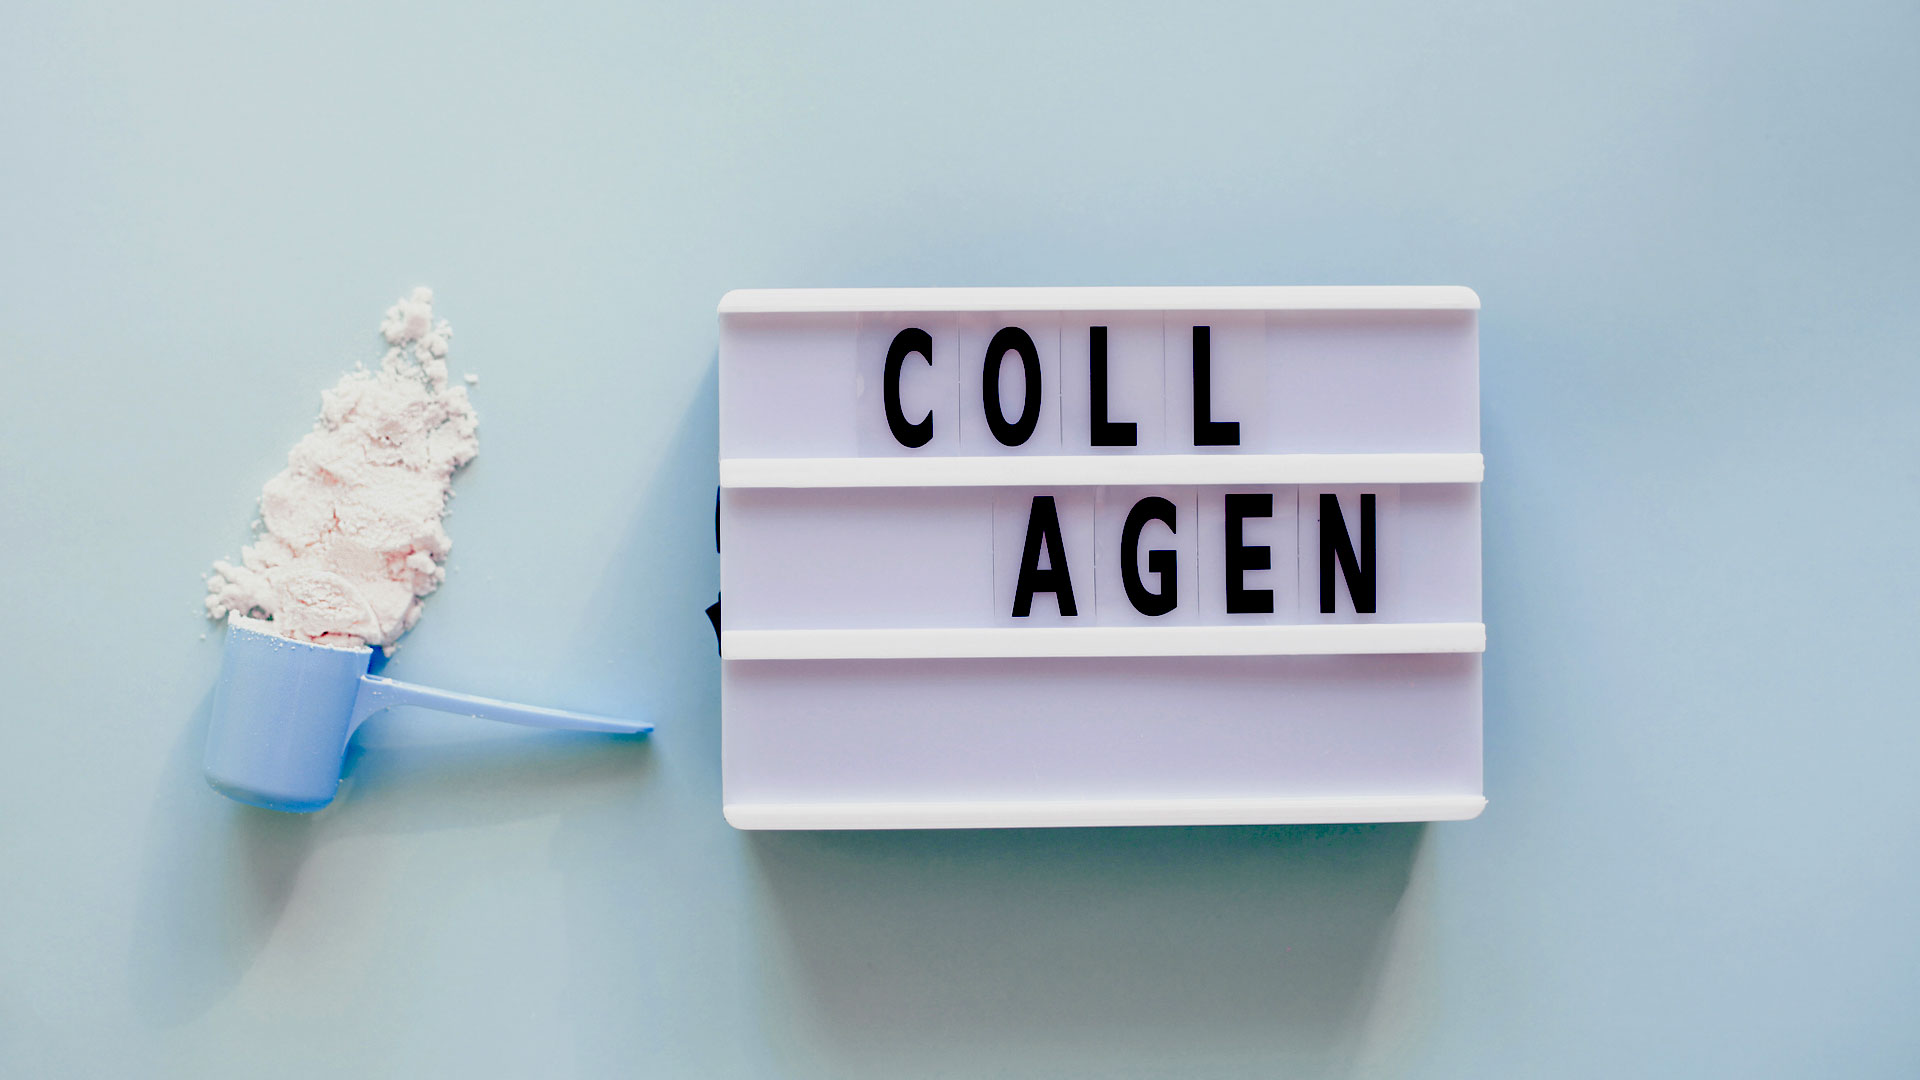 Does collagen help hair grow? image shows collagen powder